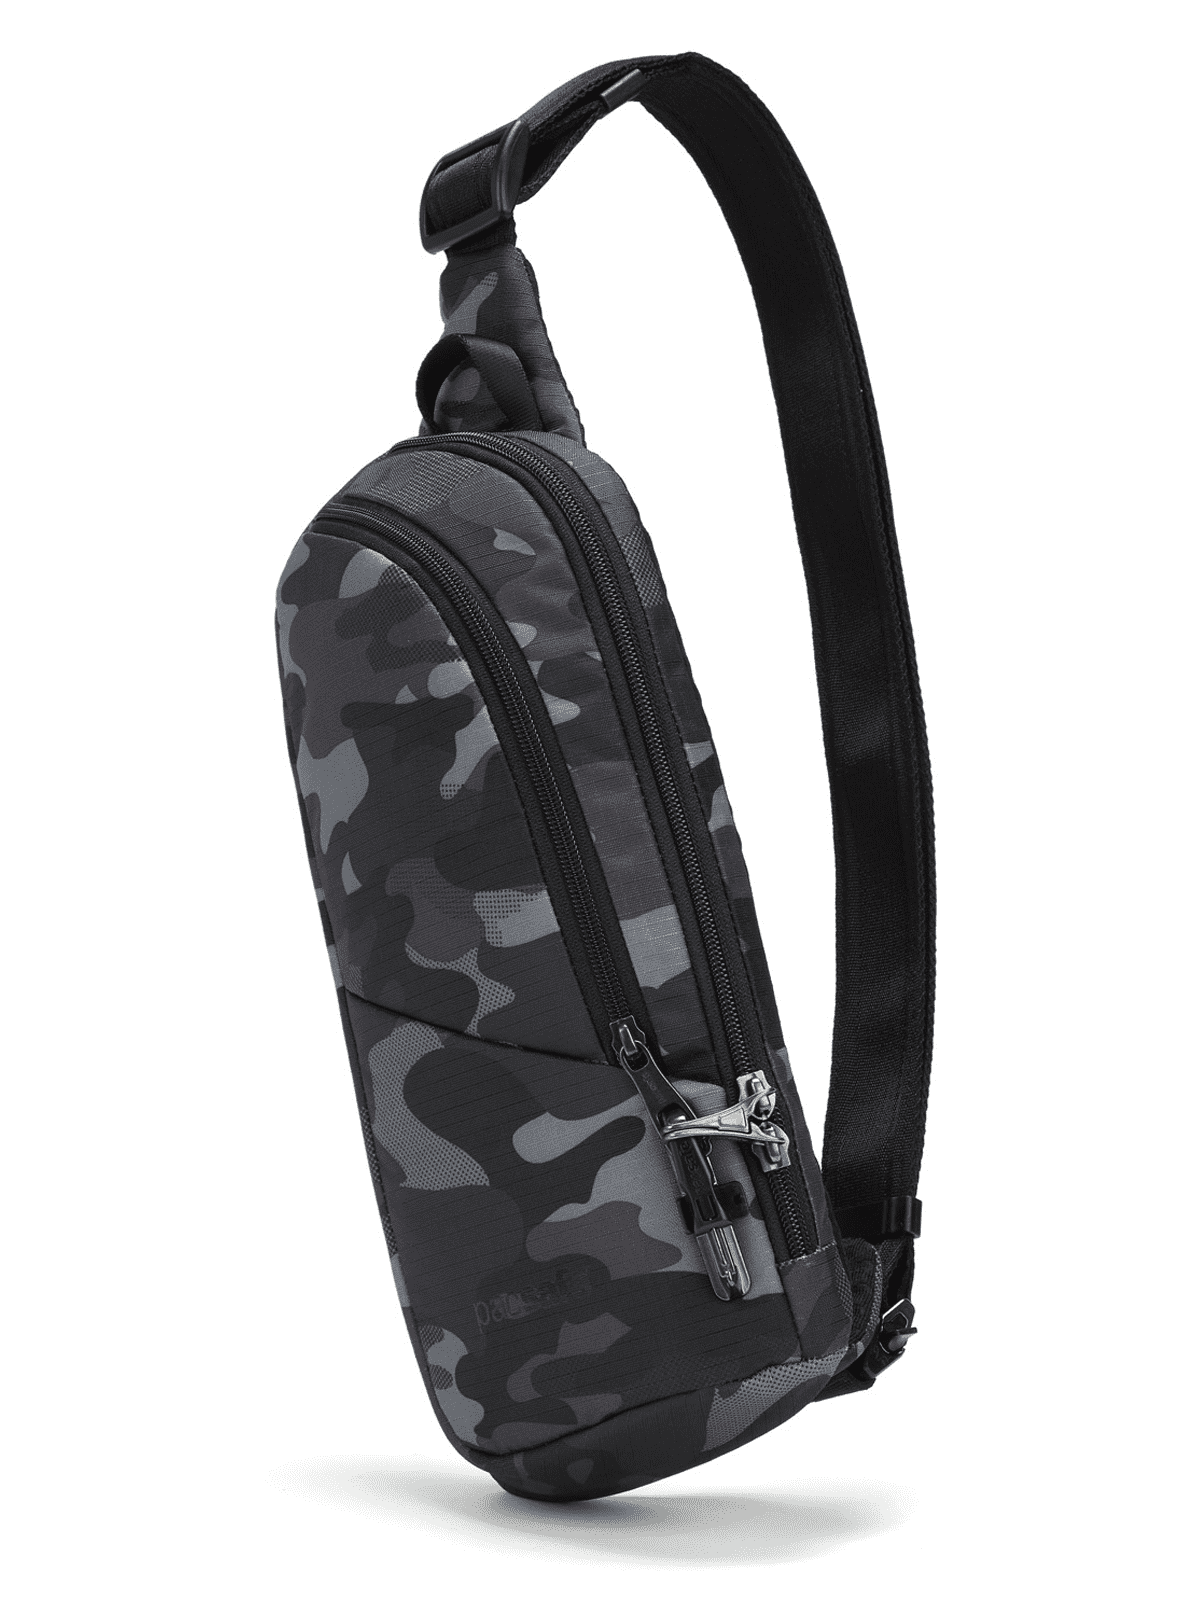 Plecak na jedno ramię Vibe 150 sling pack - Camo